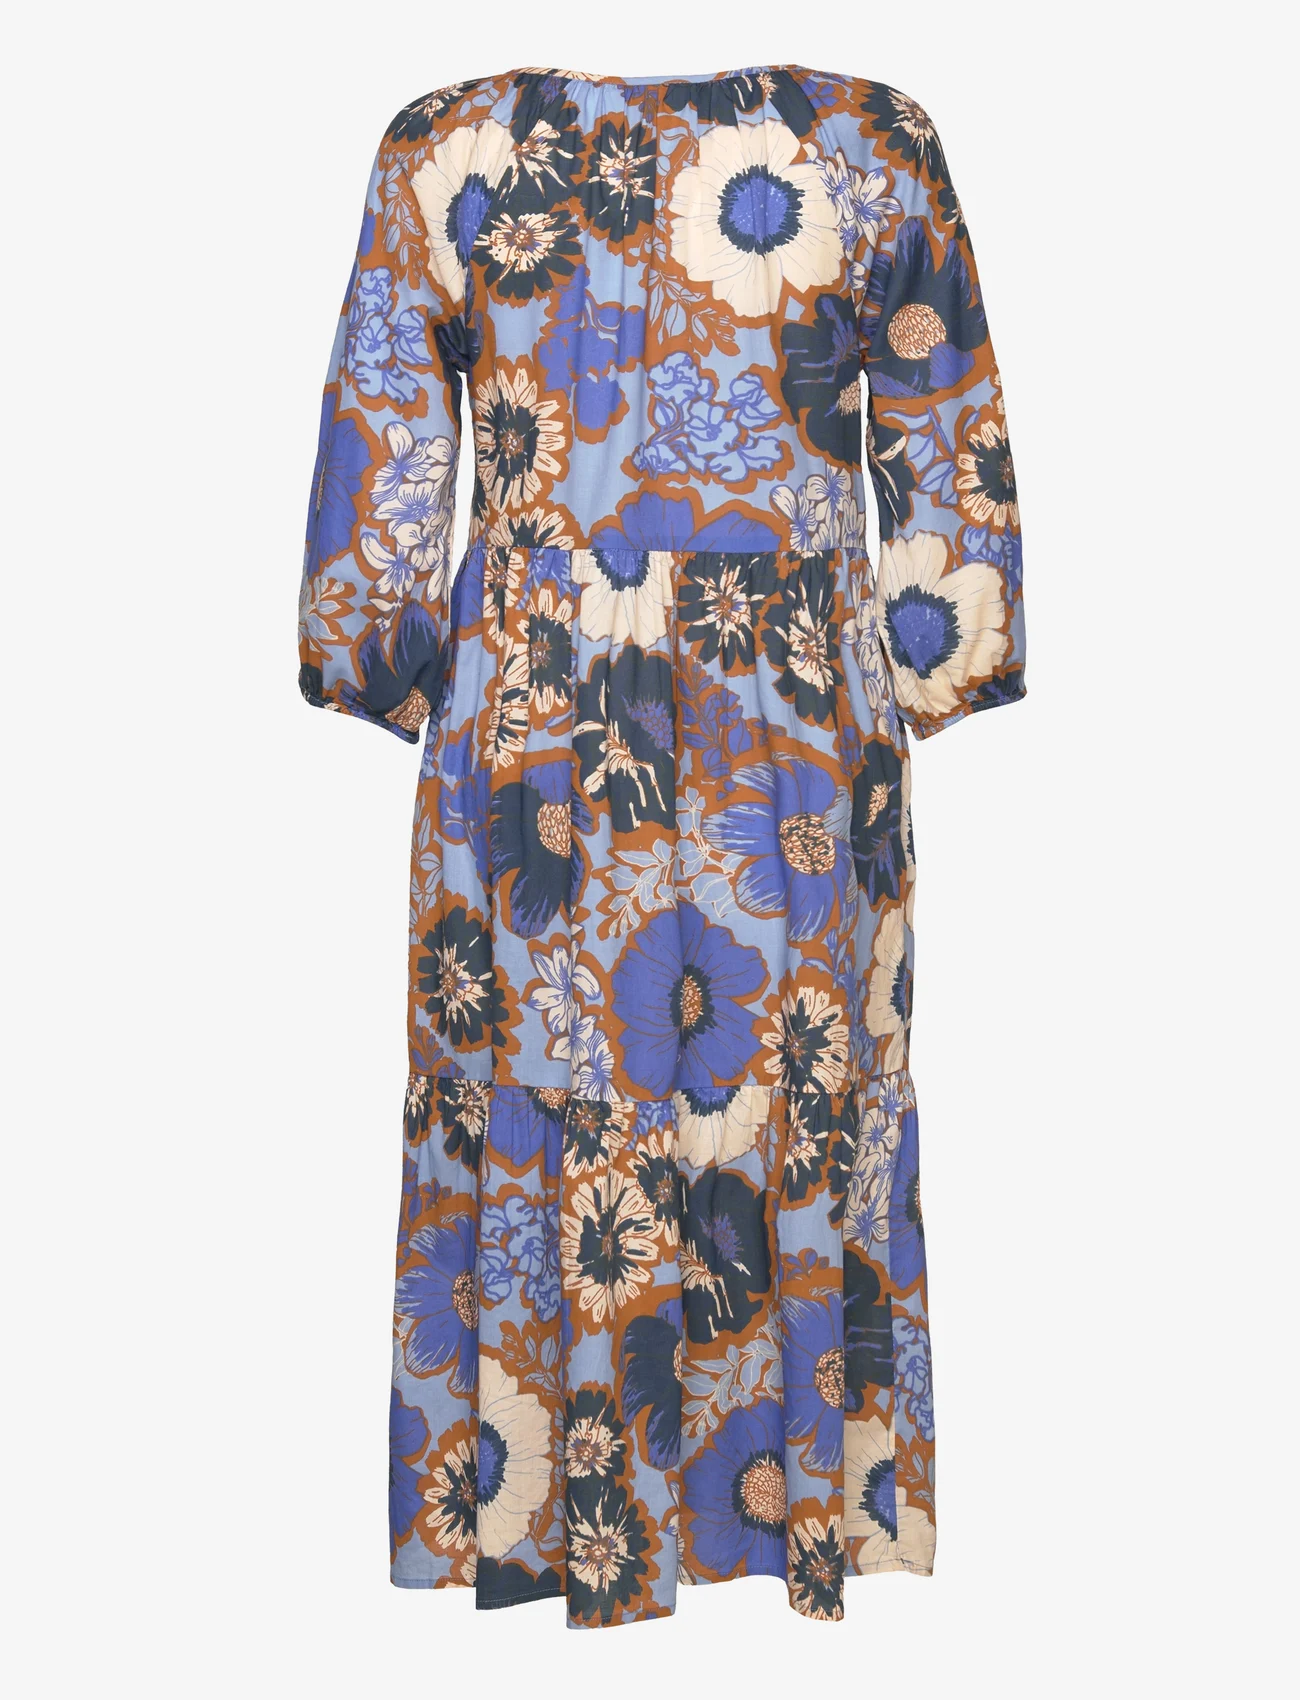 Noa Noa - CarolinaNN Dress - midi dresses - print blue/brown - 1